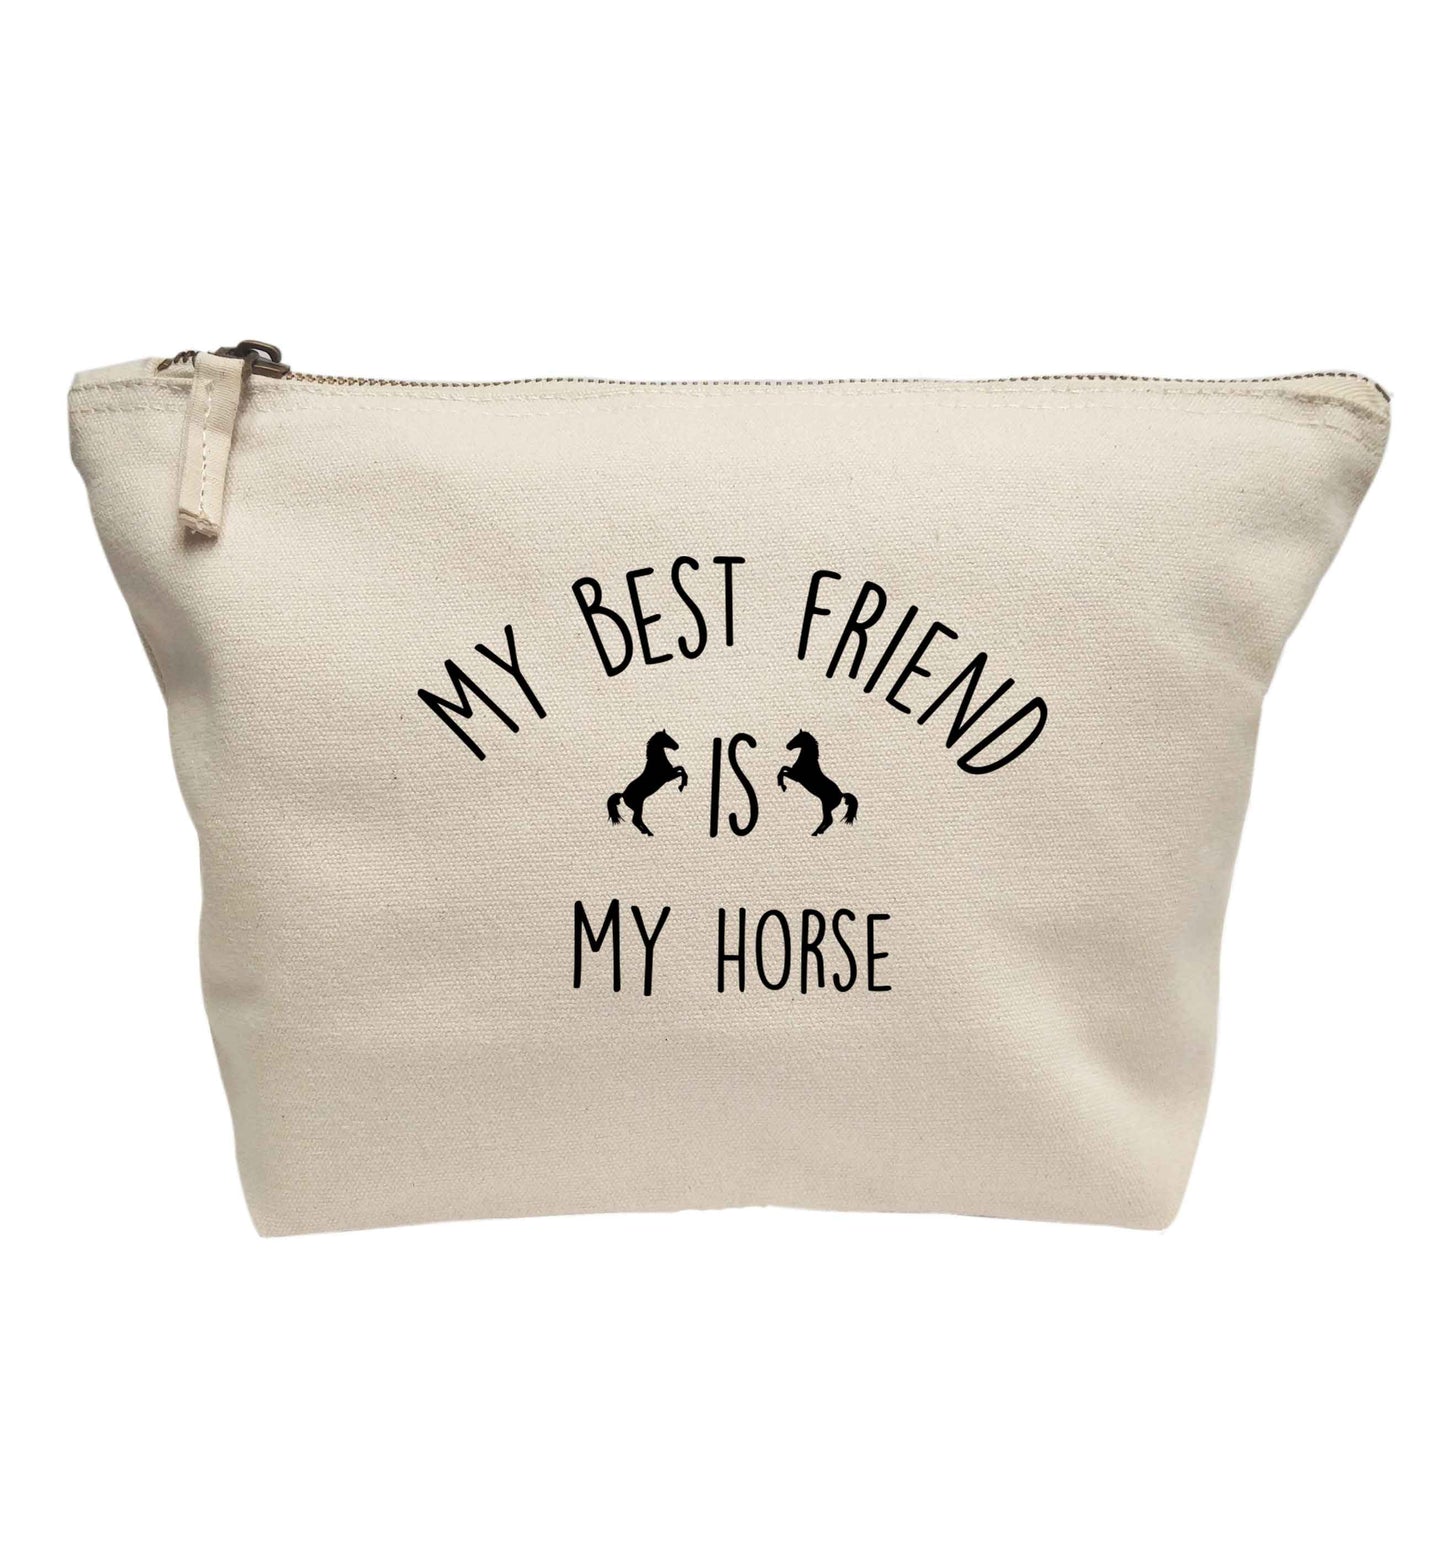 My best friend is my horse | Makeup / wash bag